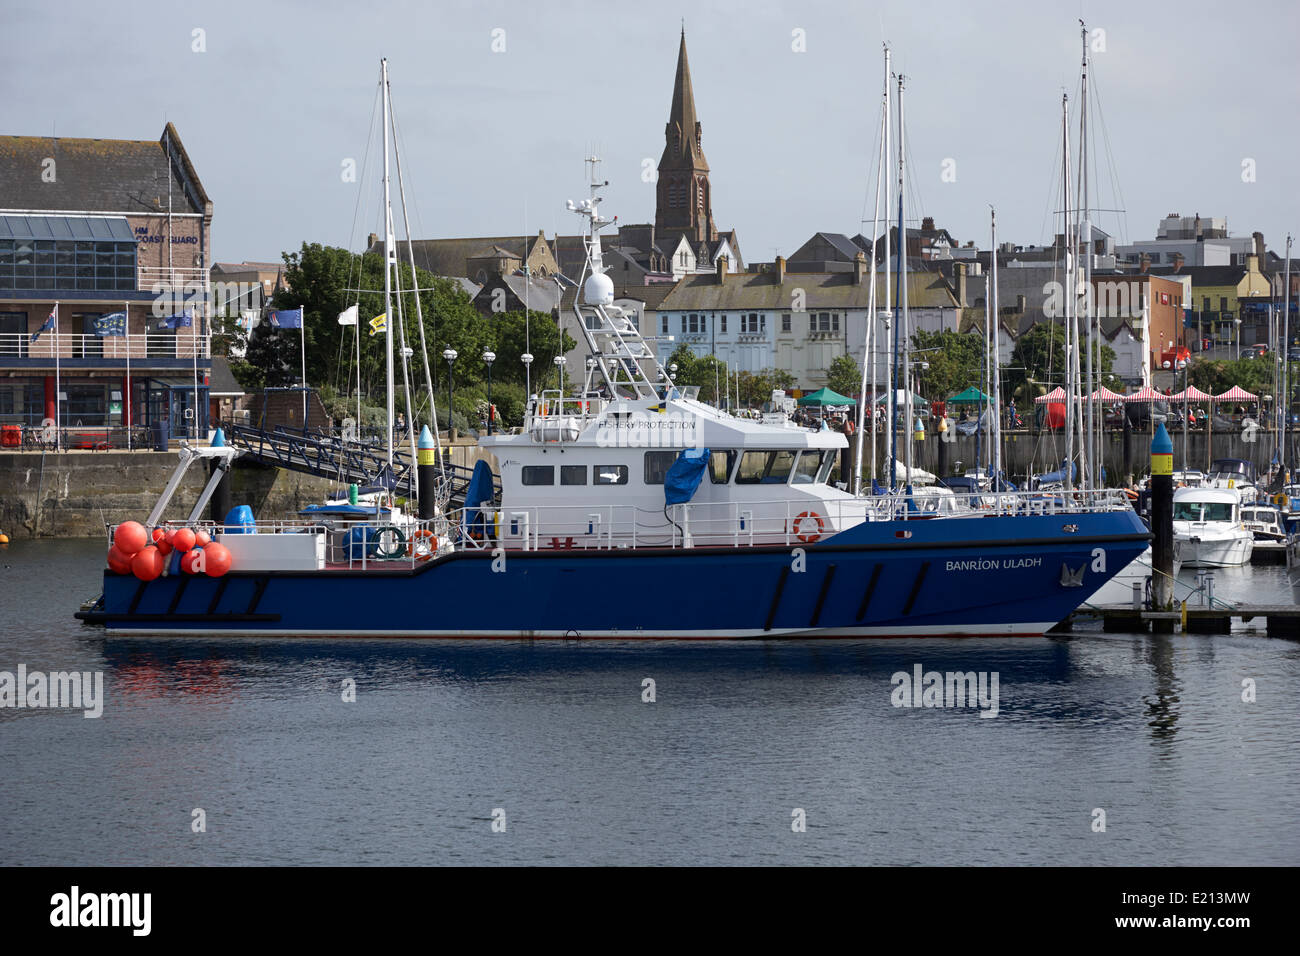 banrion uladh uk fisheries protection vessel bangor northern ireland Stock Photo